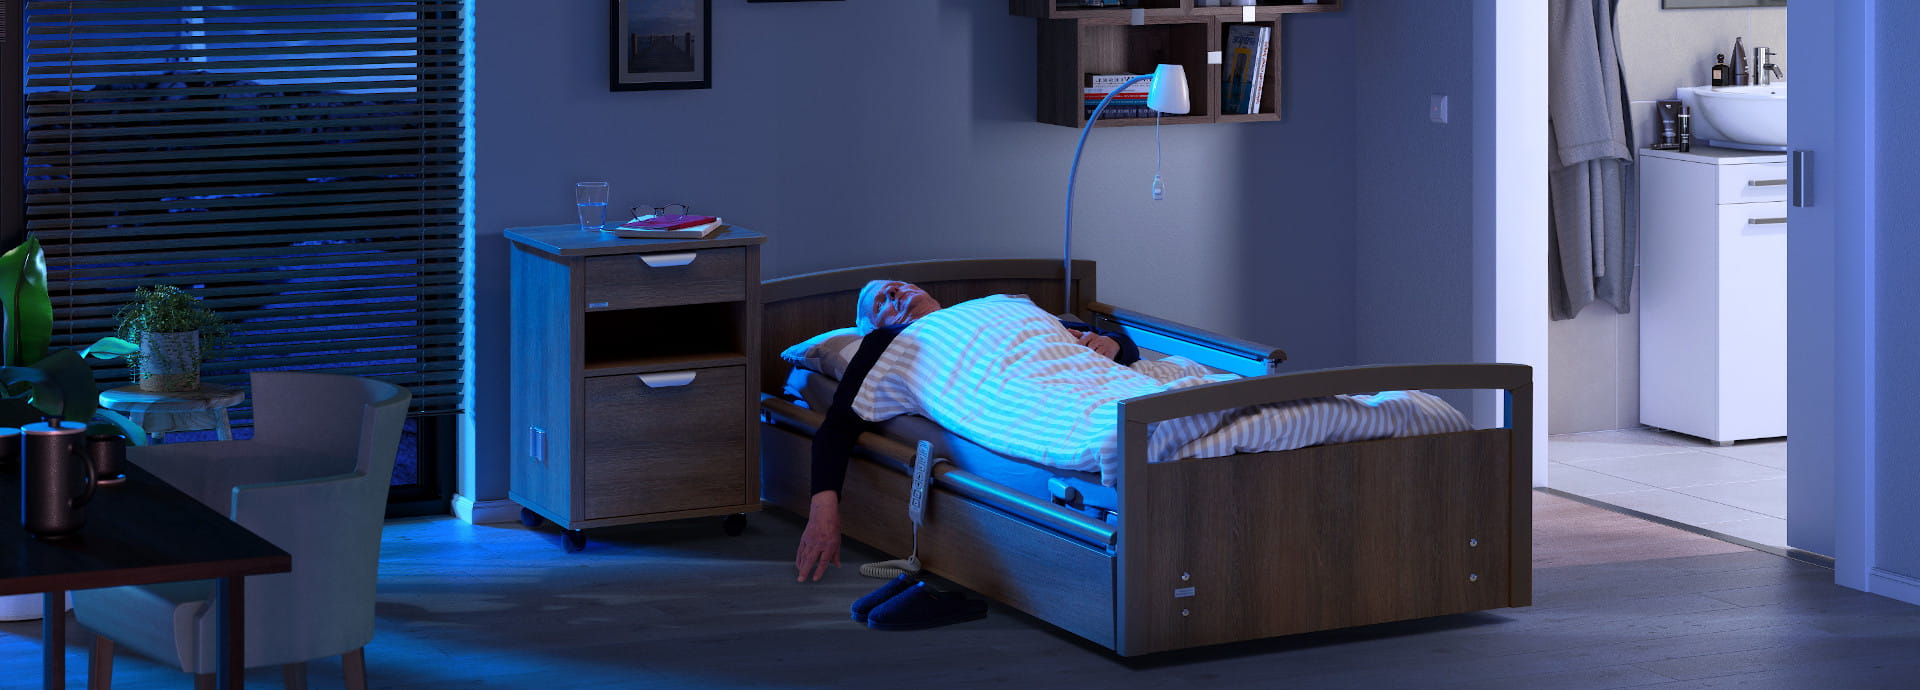 sentida sc - Universal low nursing bed - As versatile as your needs.